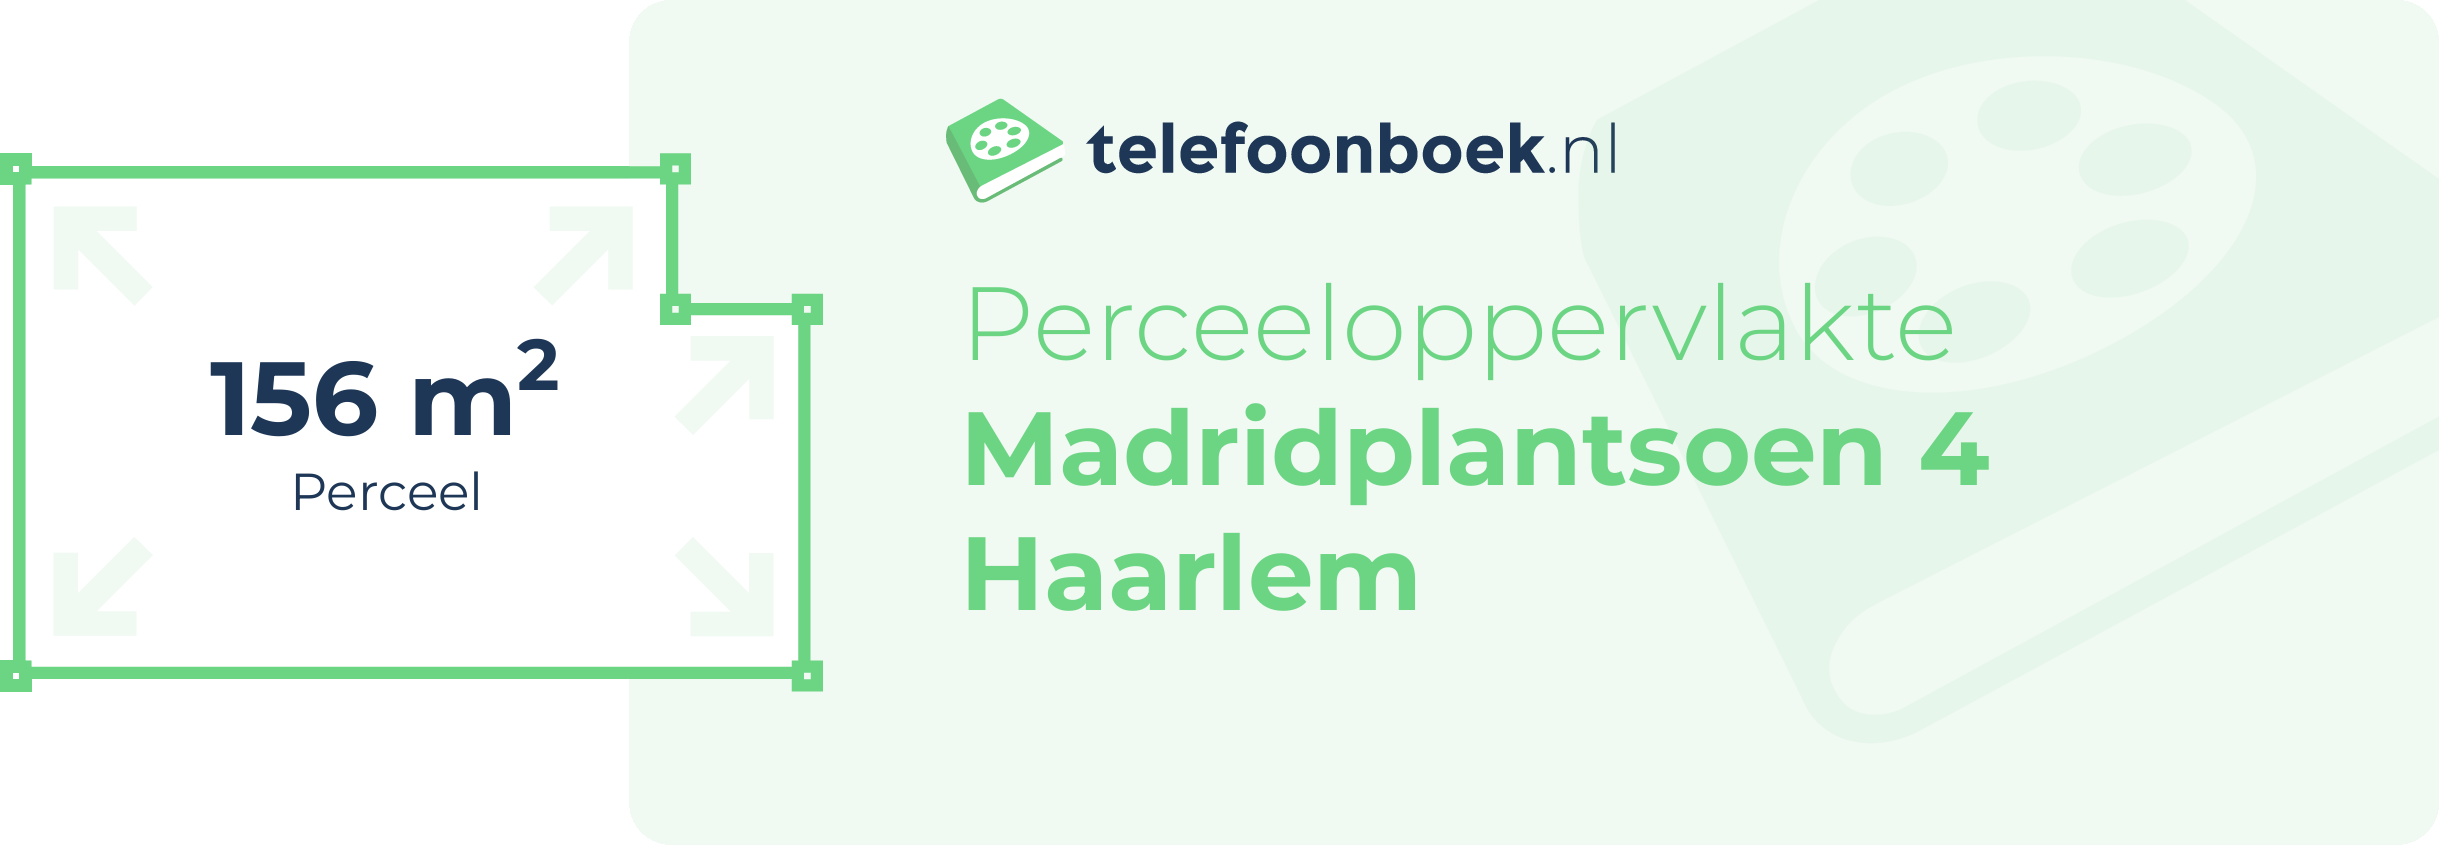 Perceeloppervlakte Madridplantsoen 4 Haarlem